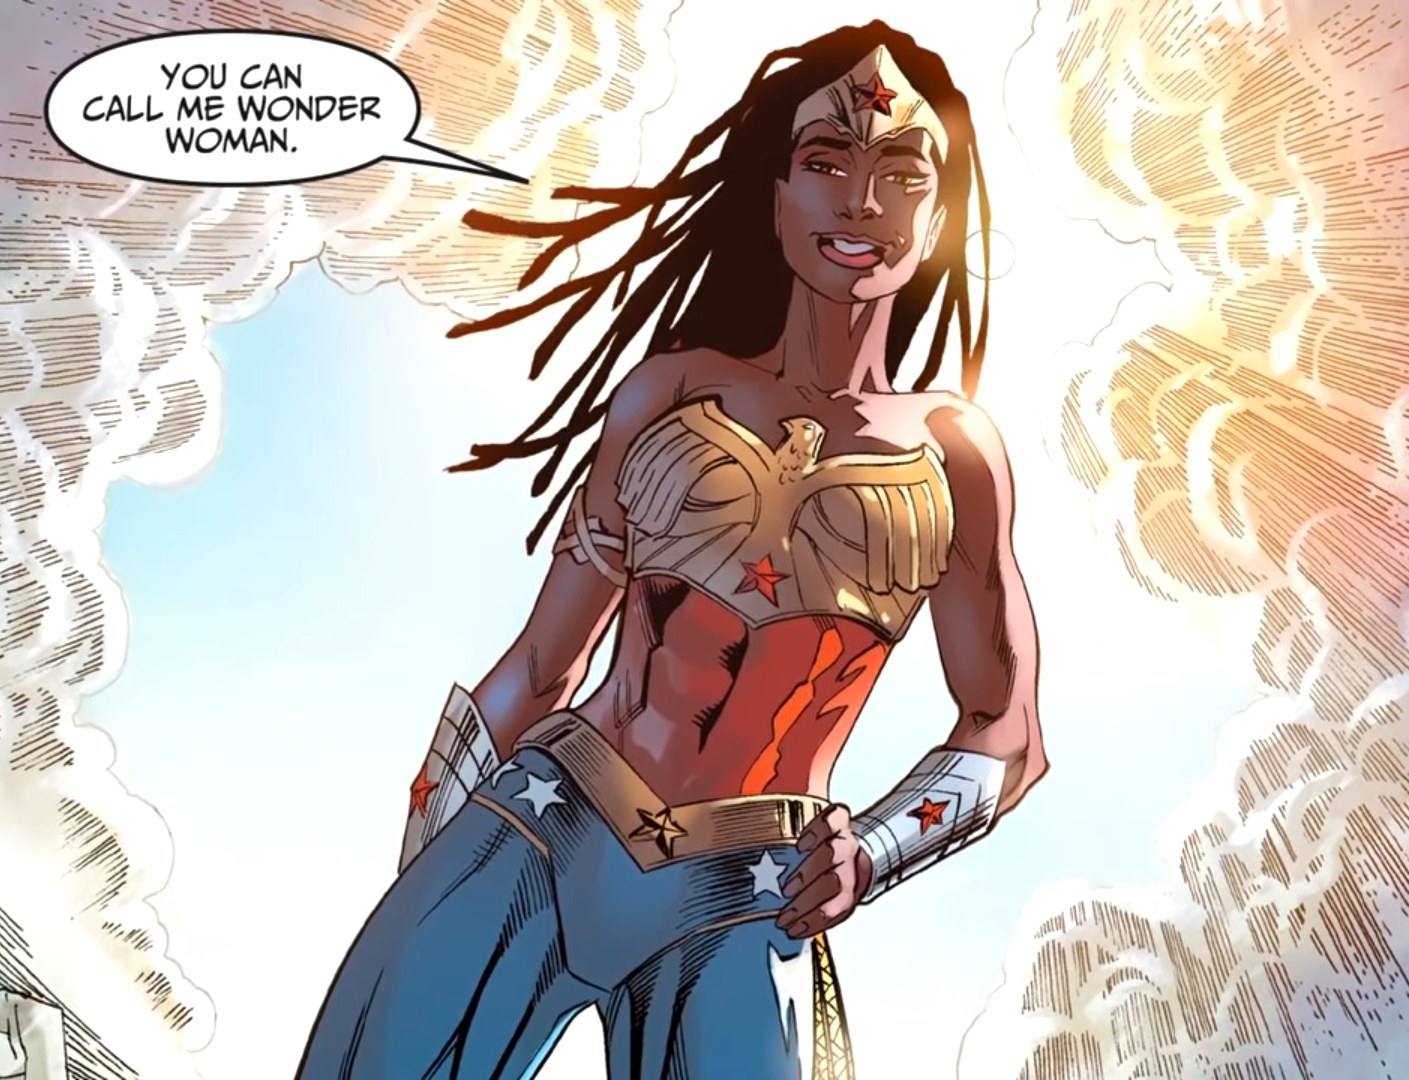 Nubia proclaiming herself as Wonder Woman